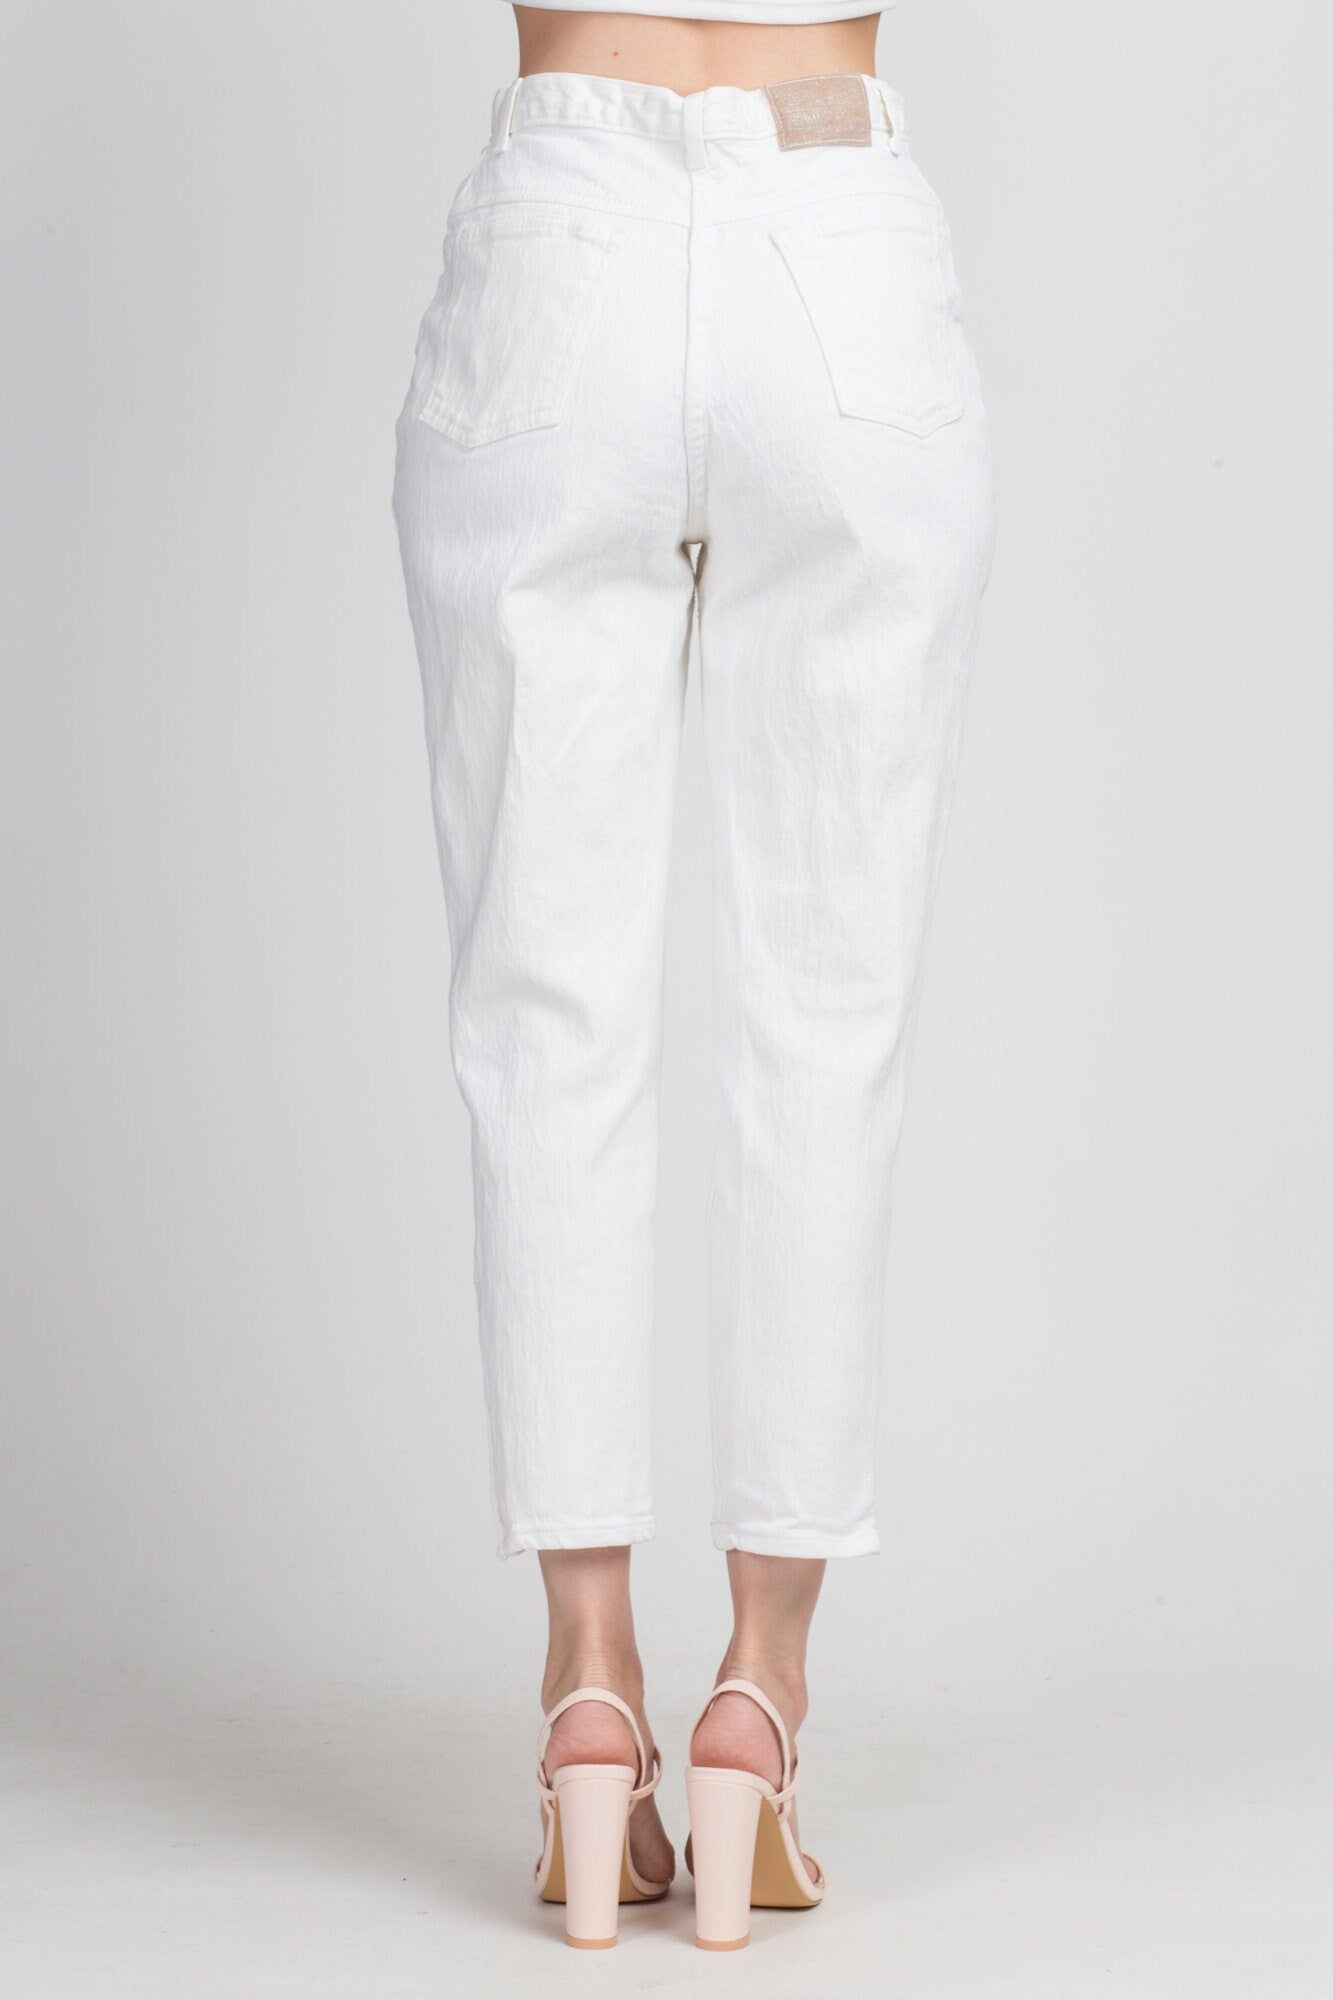 90s White High Waist Stretchy Mom Jeans - Medium, 28" 